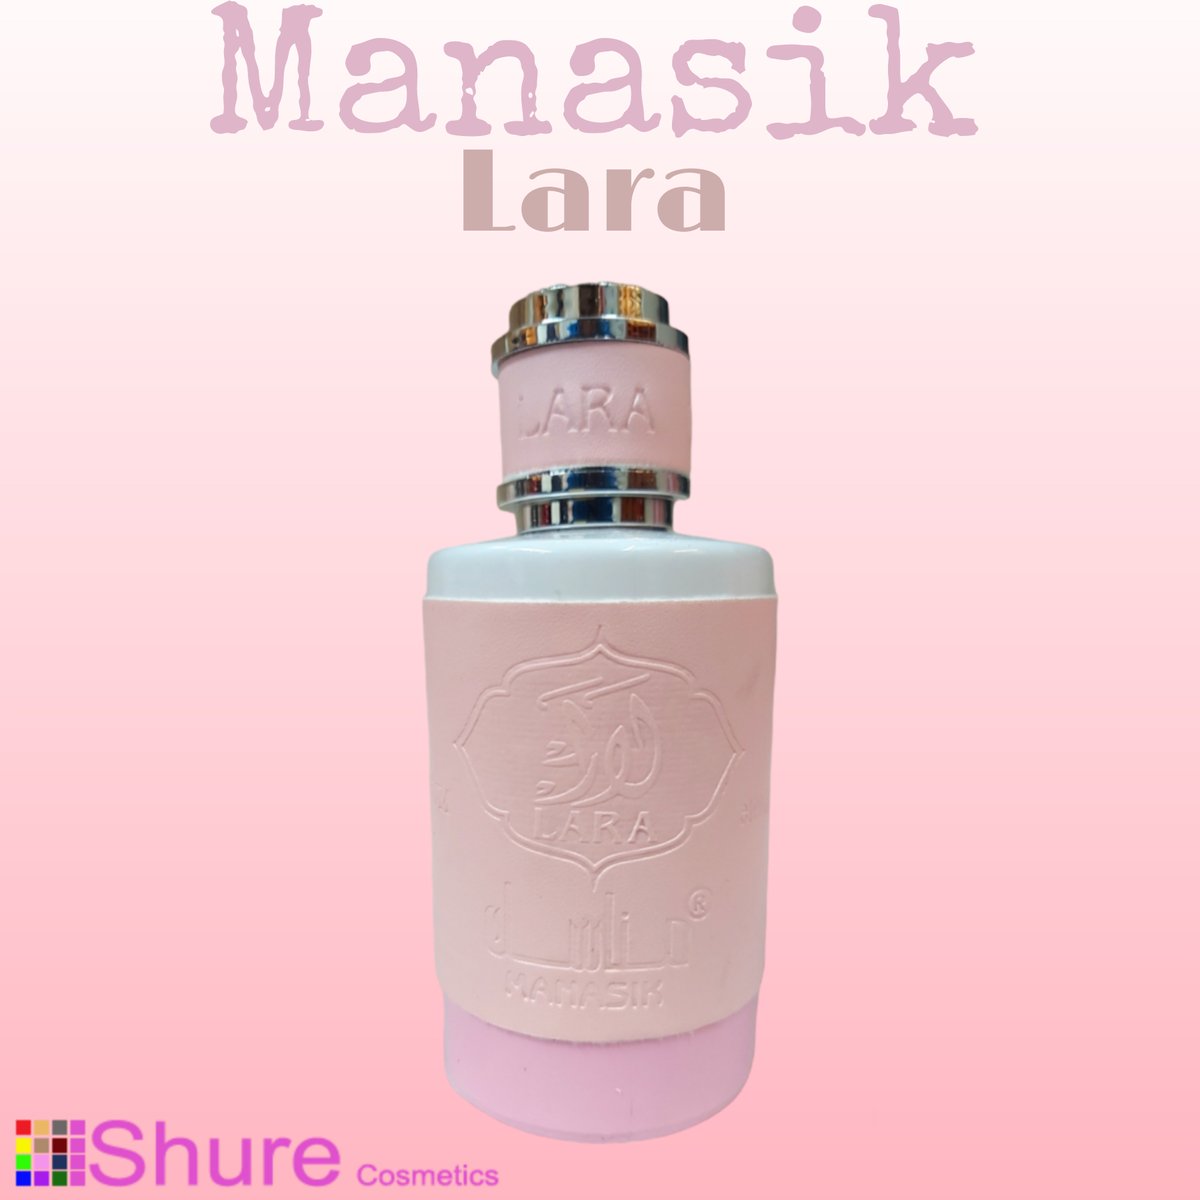 📢New Arrival... Lara (Unisex 100ml EDP) Manasik
For More on Our Website: shure-cosmetics.co.uk/manasik/
#perfumes #perfumecollection #fragrance #parfum #perfumeaddict #scent #perfumeshop #perfumelover #fragancias #scentoftheday #eaudeparfum #m #fragrancelover #fashion #love #fragrance